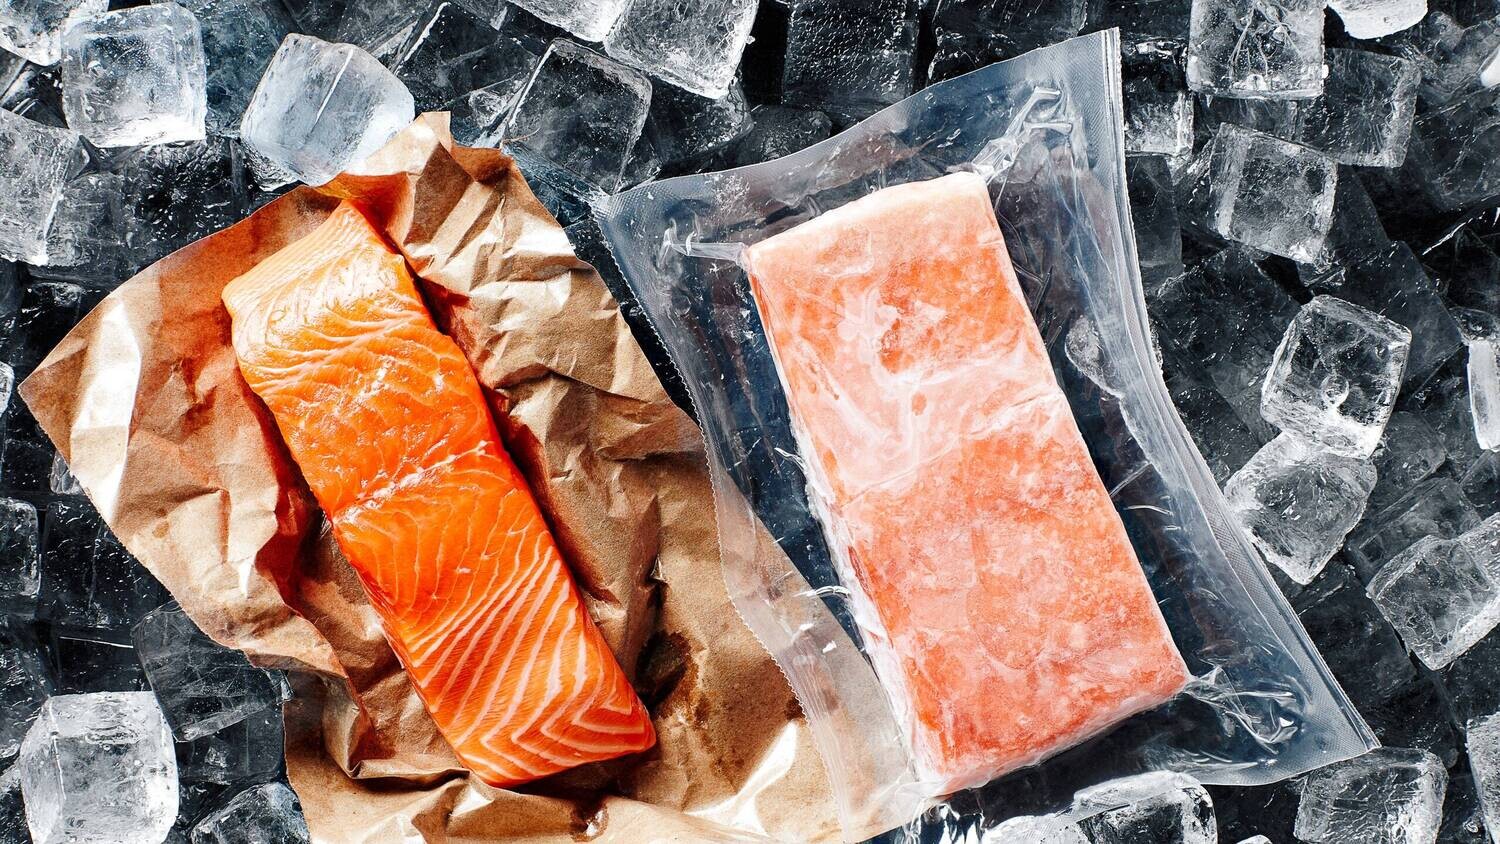 180G Frozen Salmon Fillet Portion